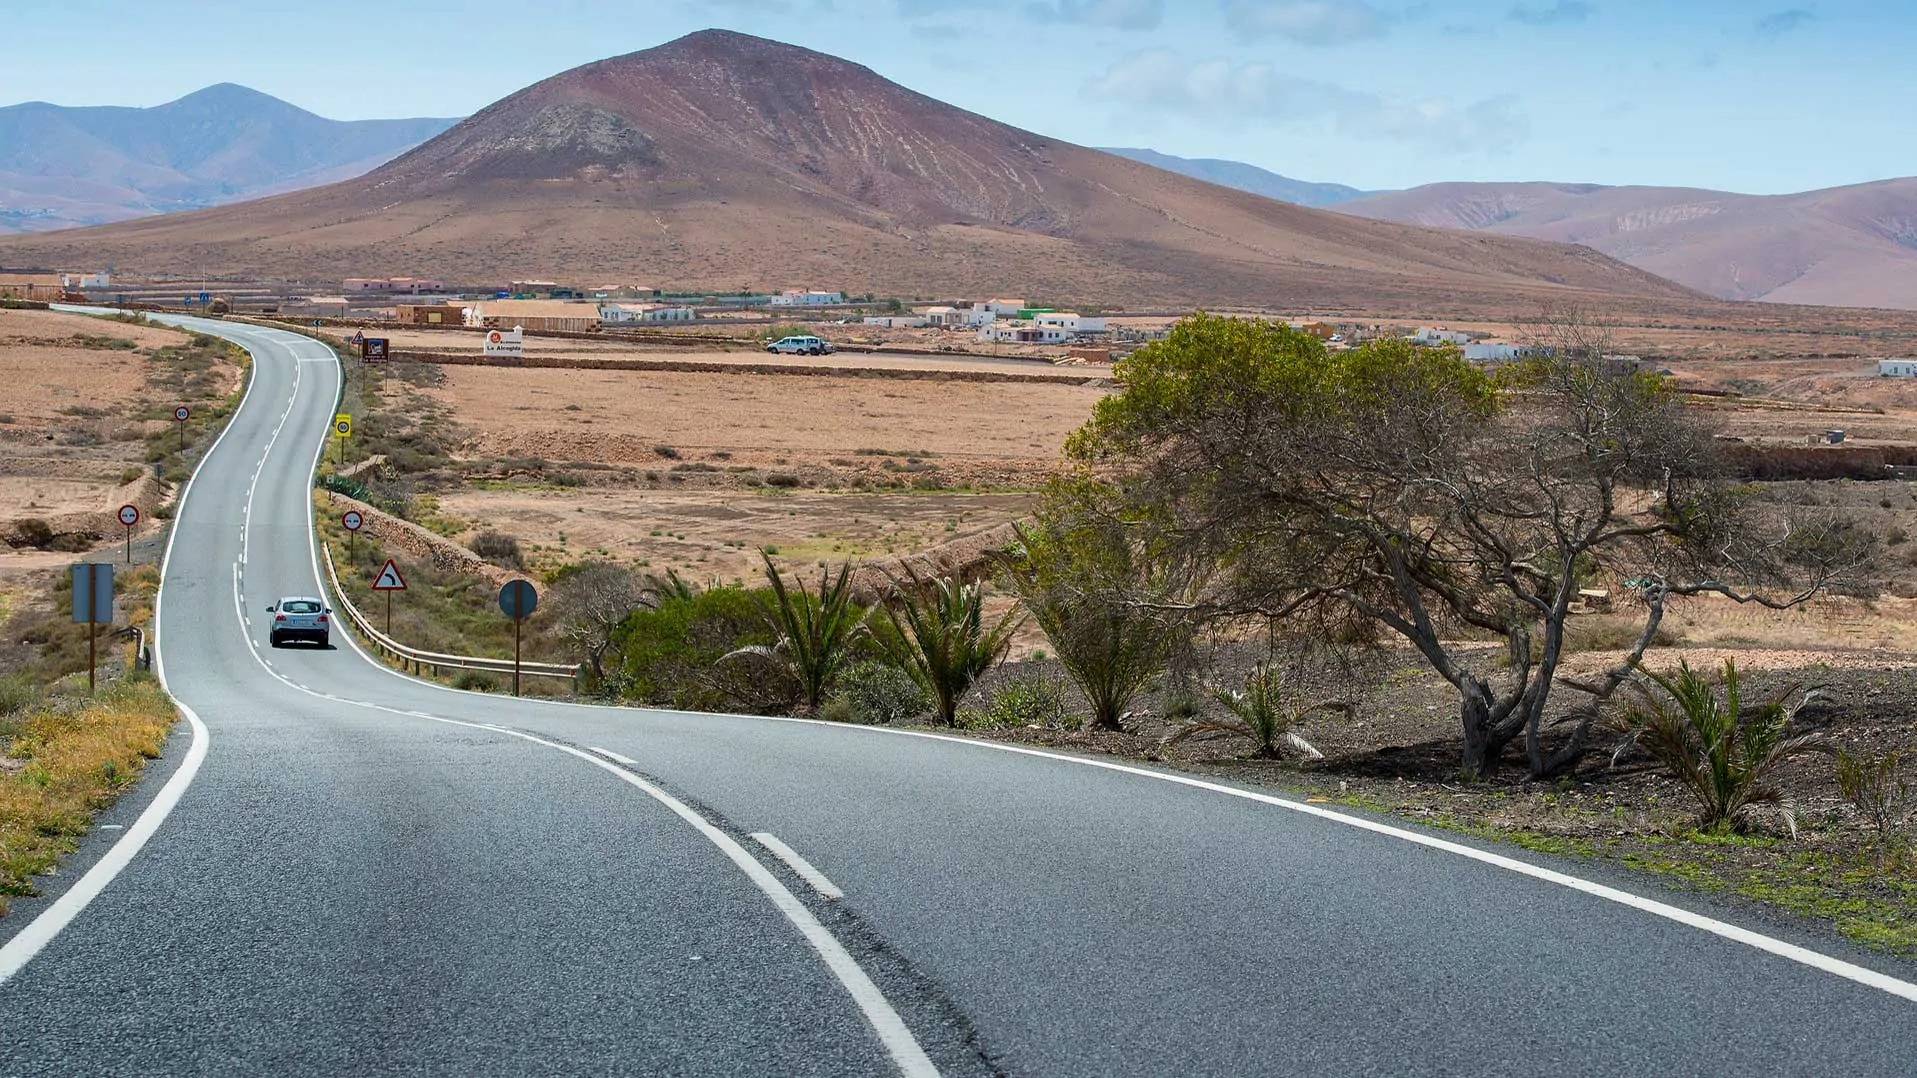 driving in fuerteventura - One of the many lovely empty roads in Fuerteventura